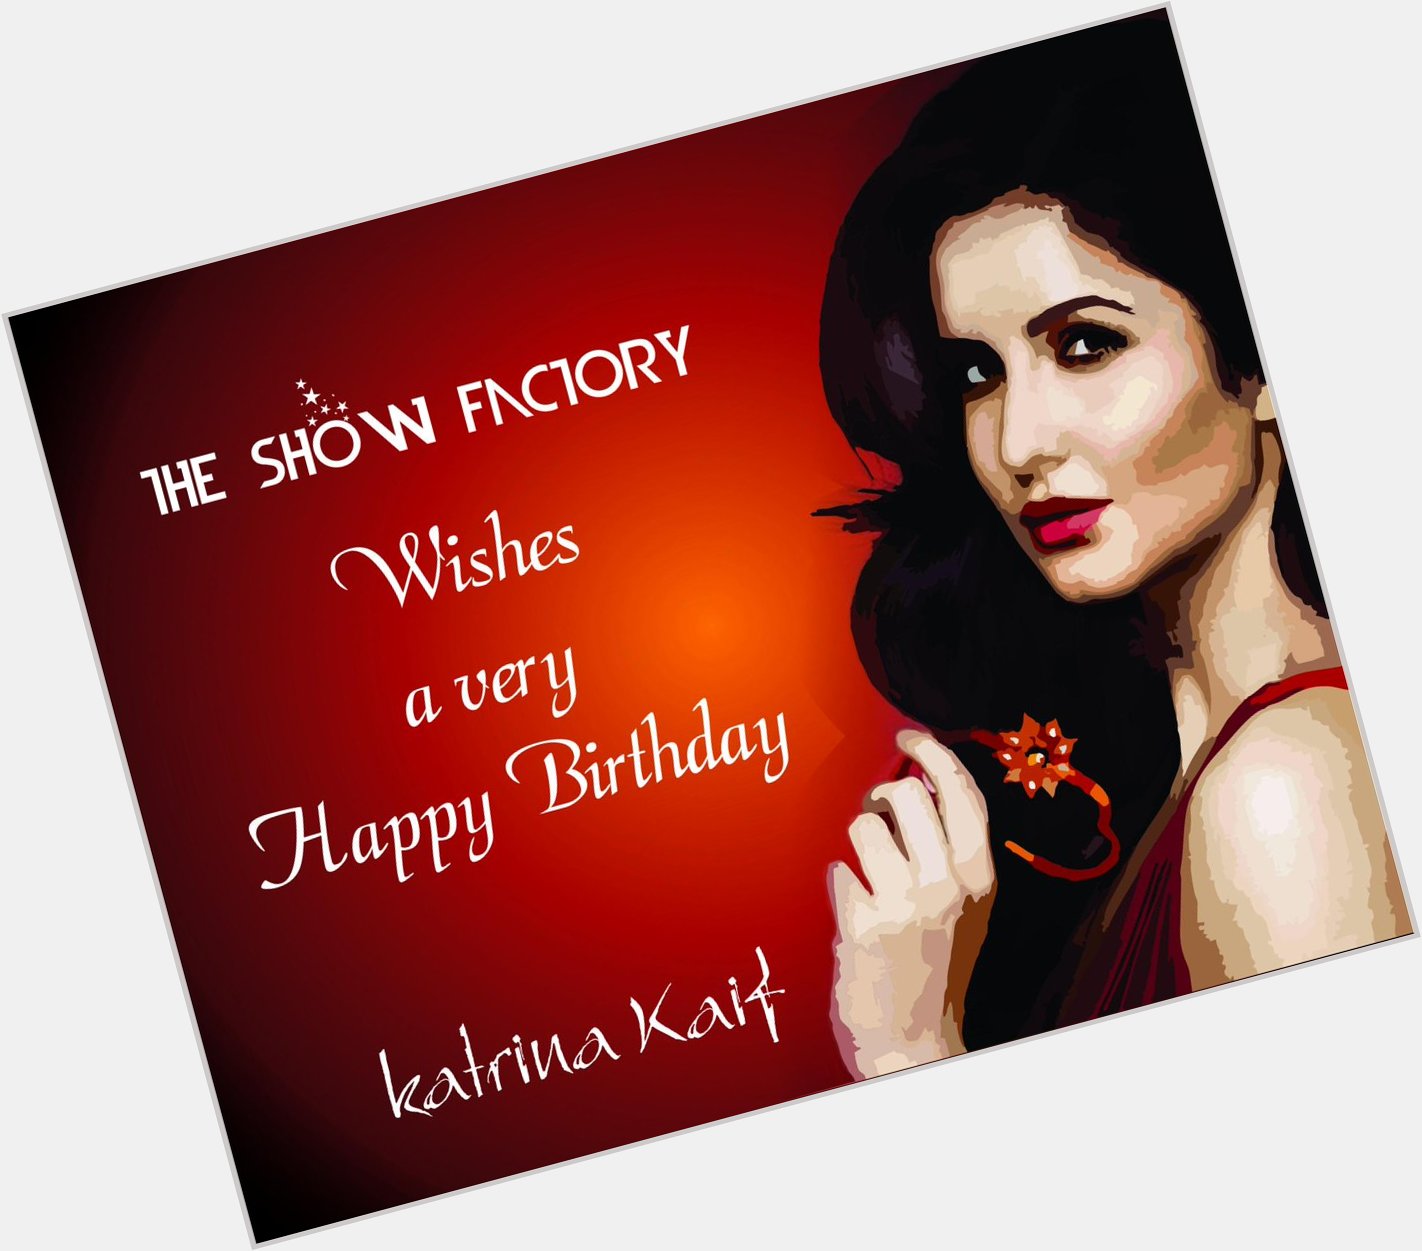 The Show Factory wishes Happy Birthday to katrina kaif.   redefined 